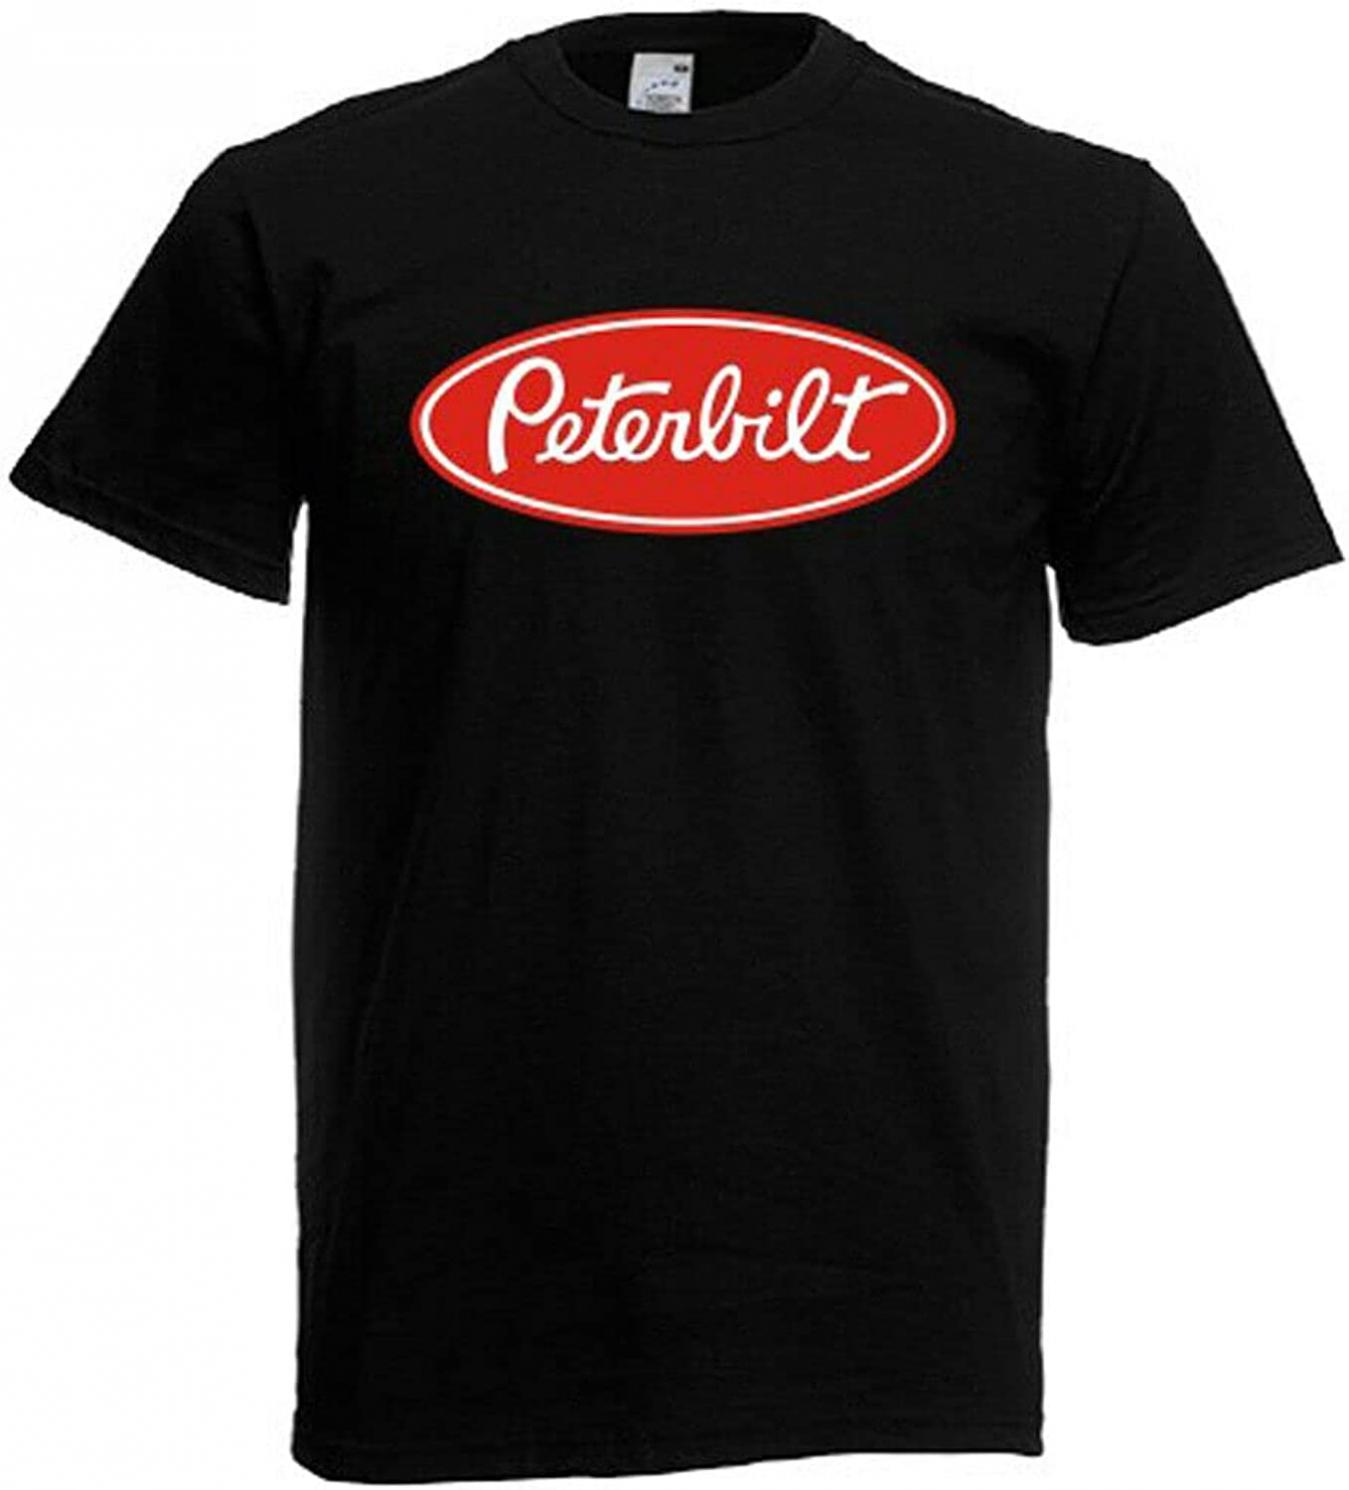 Peterbilt Trucks Red Logo Symbol Men's Black T-Shirt Funny Birthday Cotton Tee Vintage Gift for Men Women